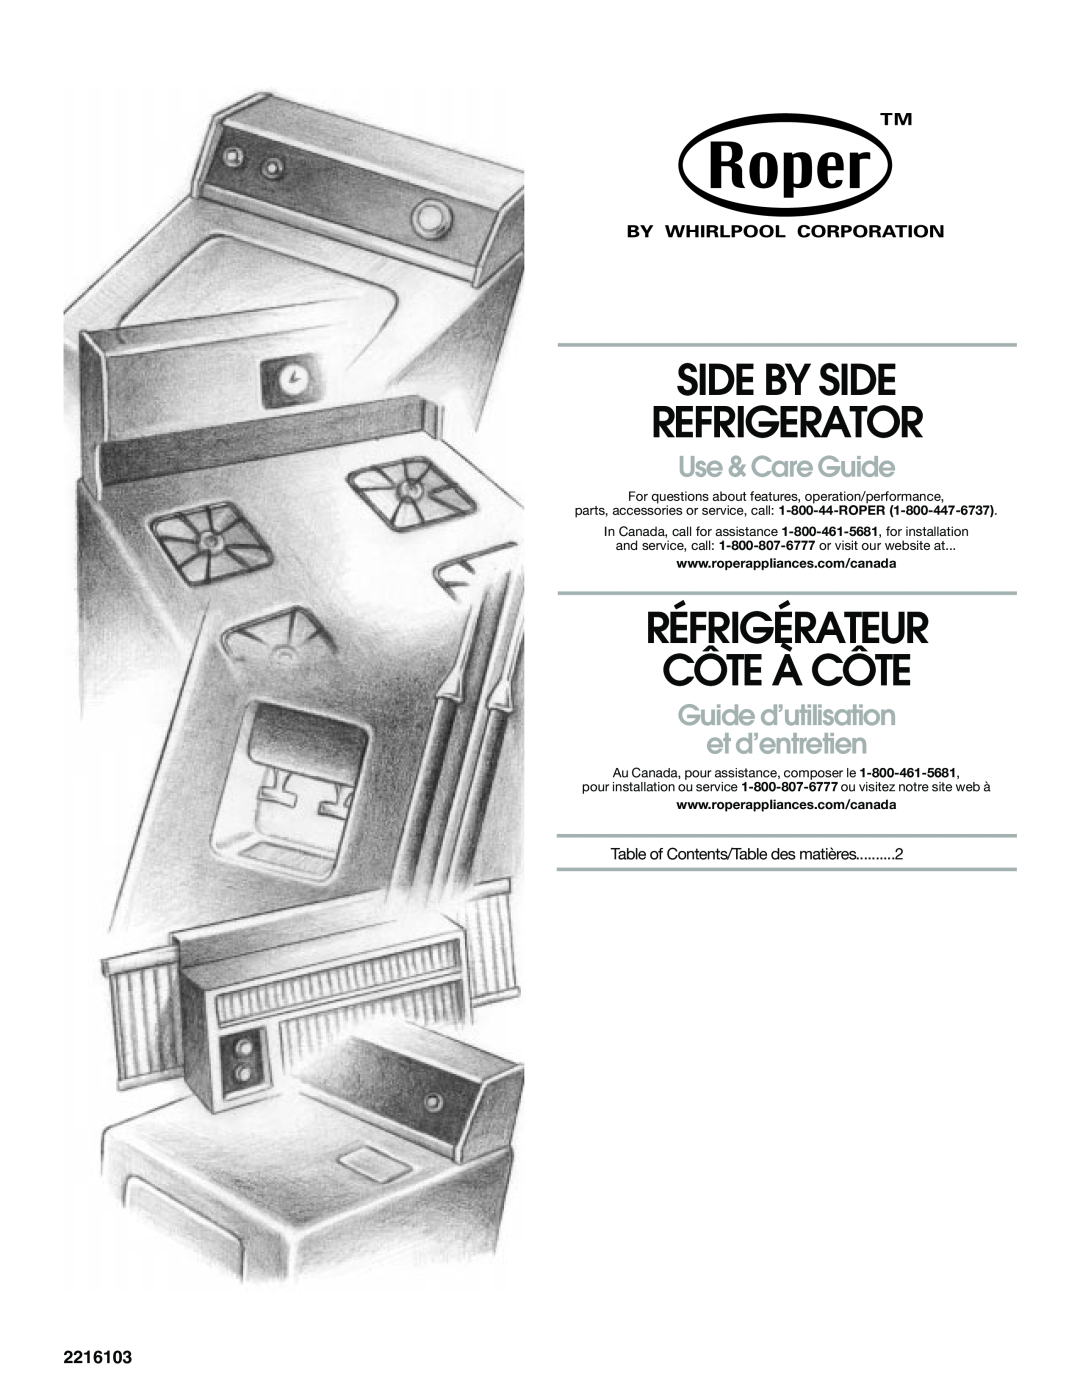 Whirlpool RS22AQXGN03 manual Side By Side Refrigerator, Réfrigérateur Côte À Côte, Use & Care Guide, 2216103 